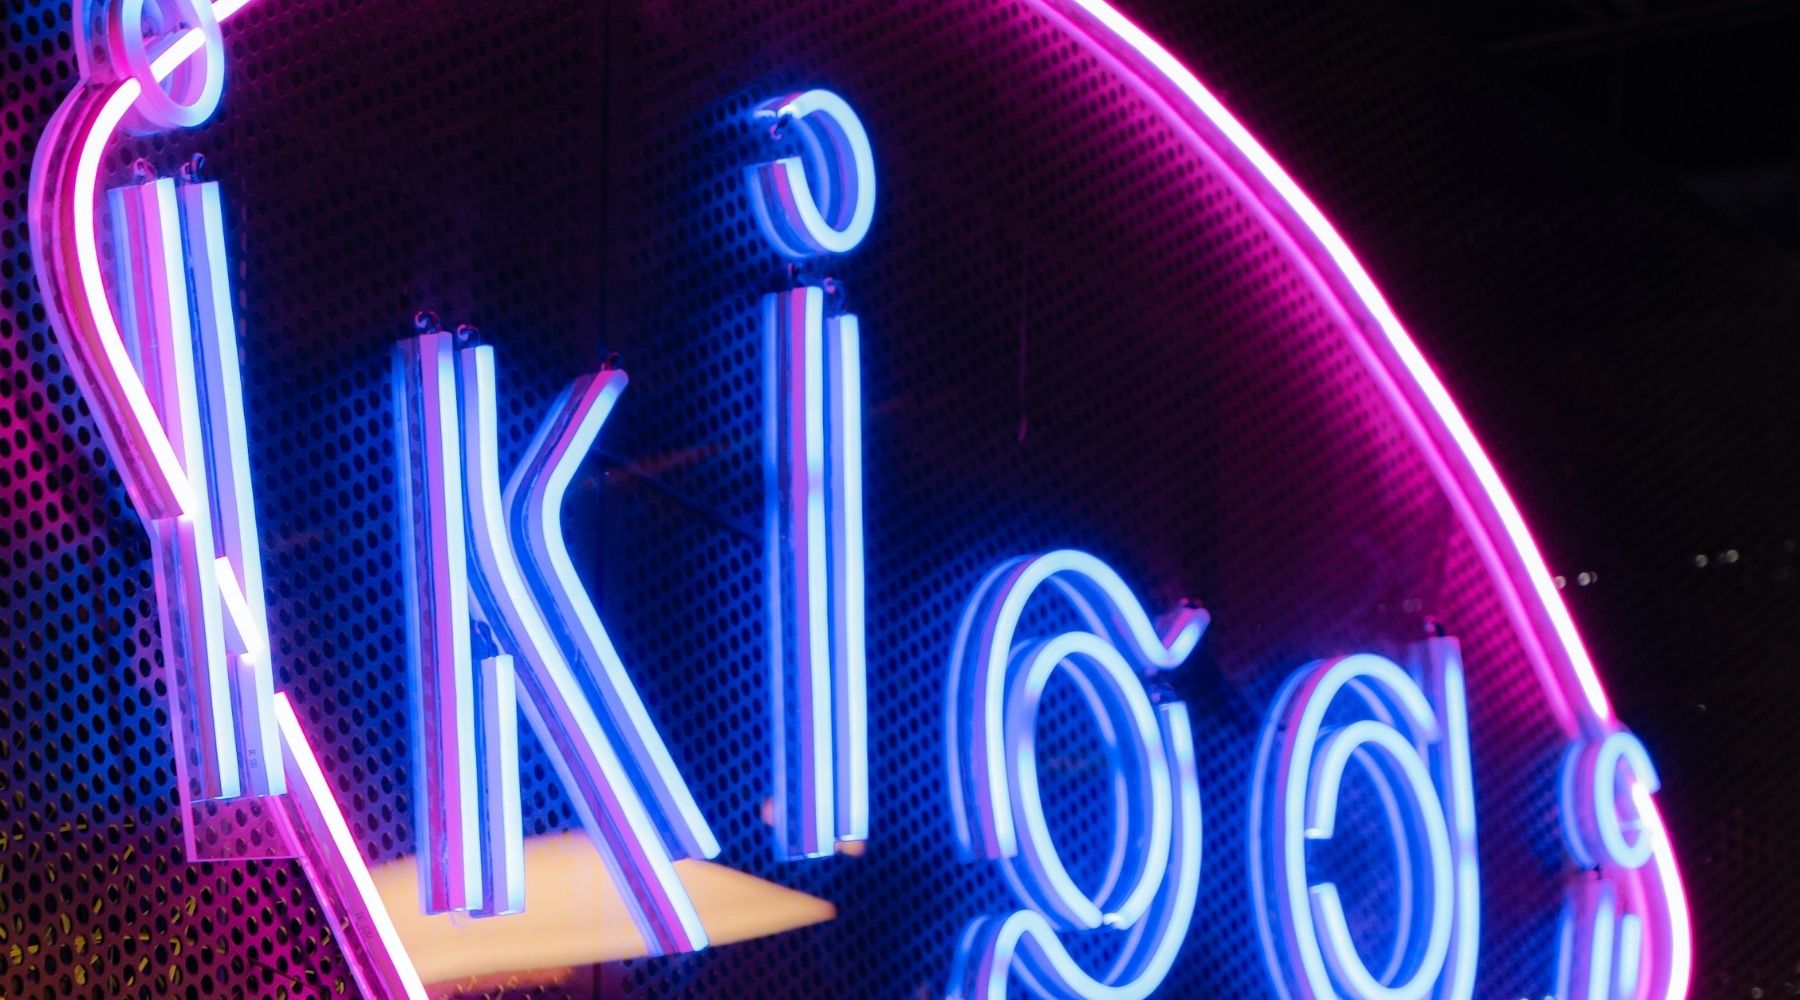 ikigo neon sign business logo